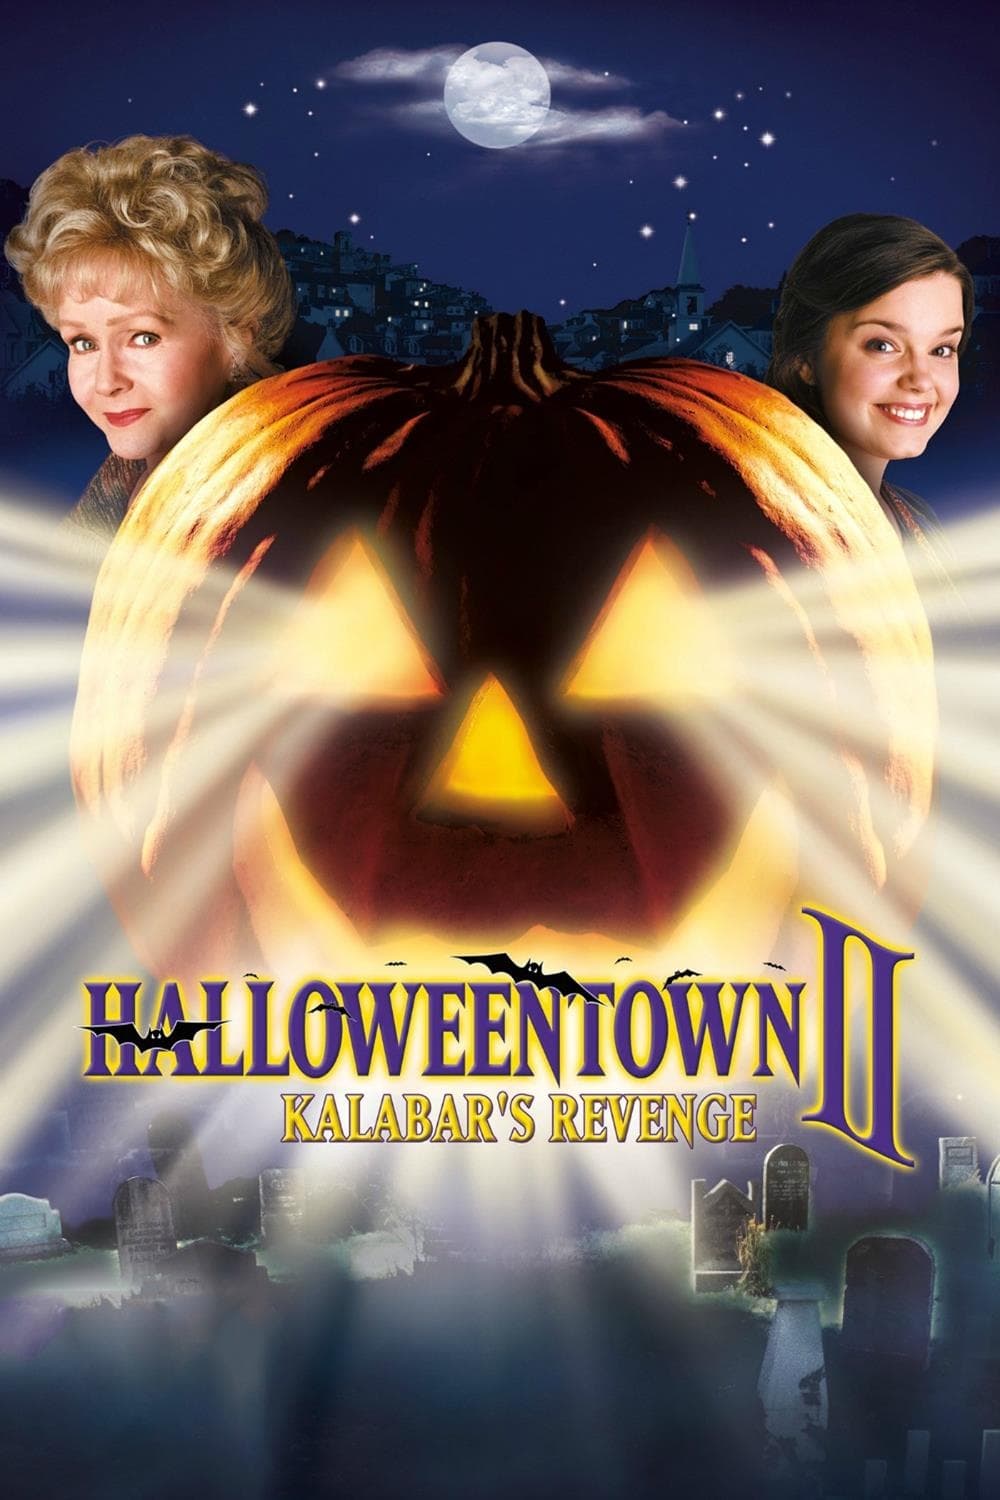 Poster for the movie "Halloweentown II: Kalabar's Revenge"